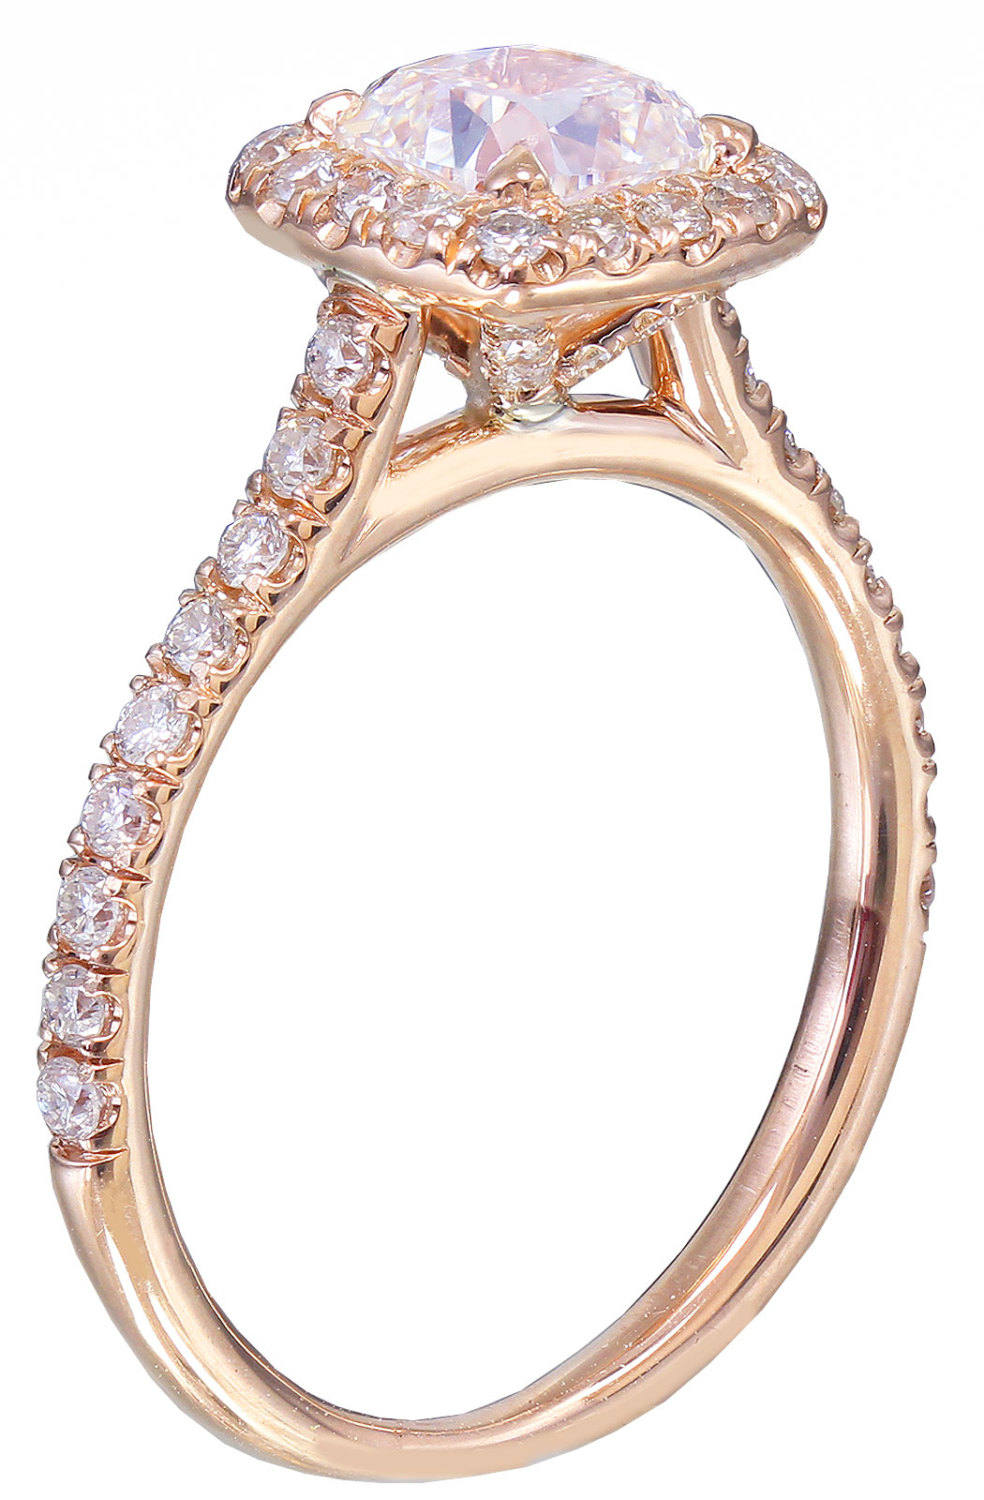 14k rose gold cushion cut moissanite and diamond engagement ring deco halo Wedding Bridal Anniversary Natural Diamonds 1.80ct